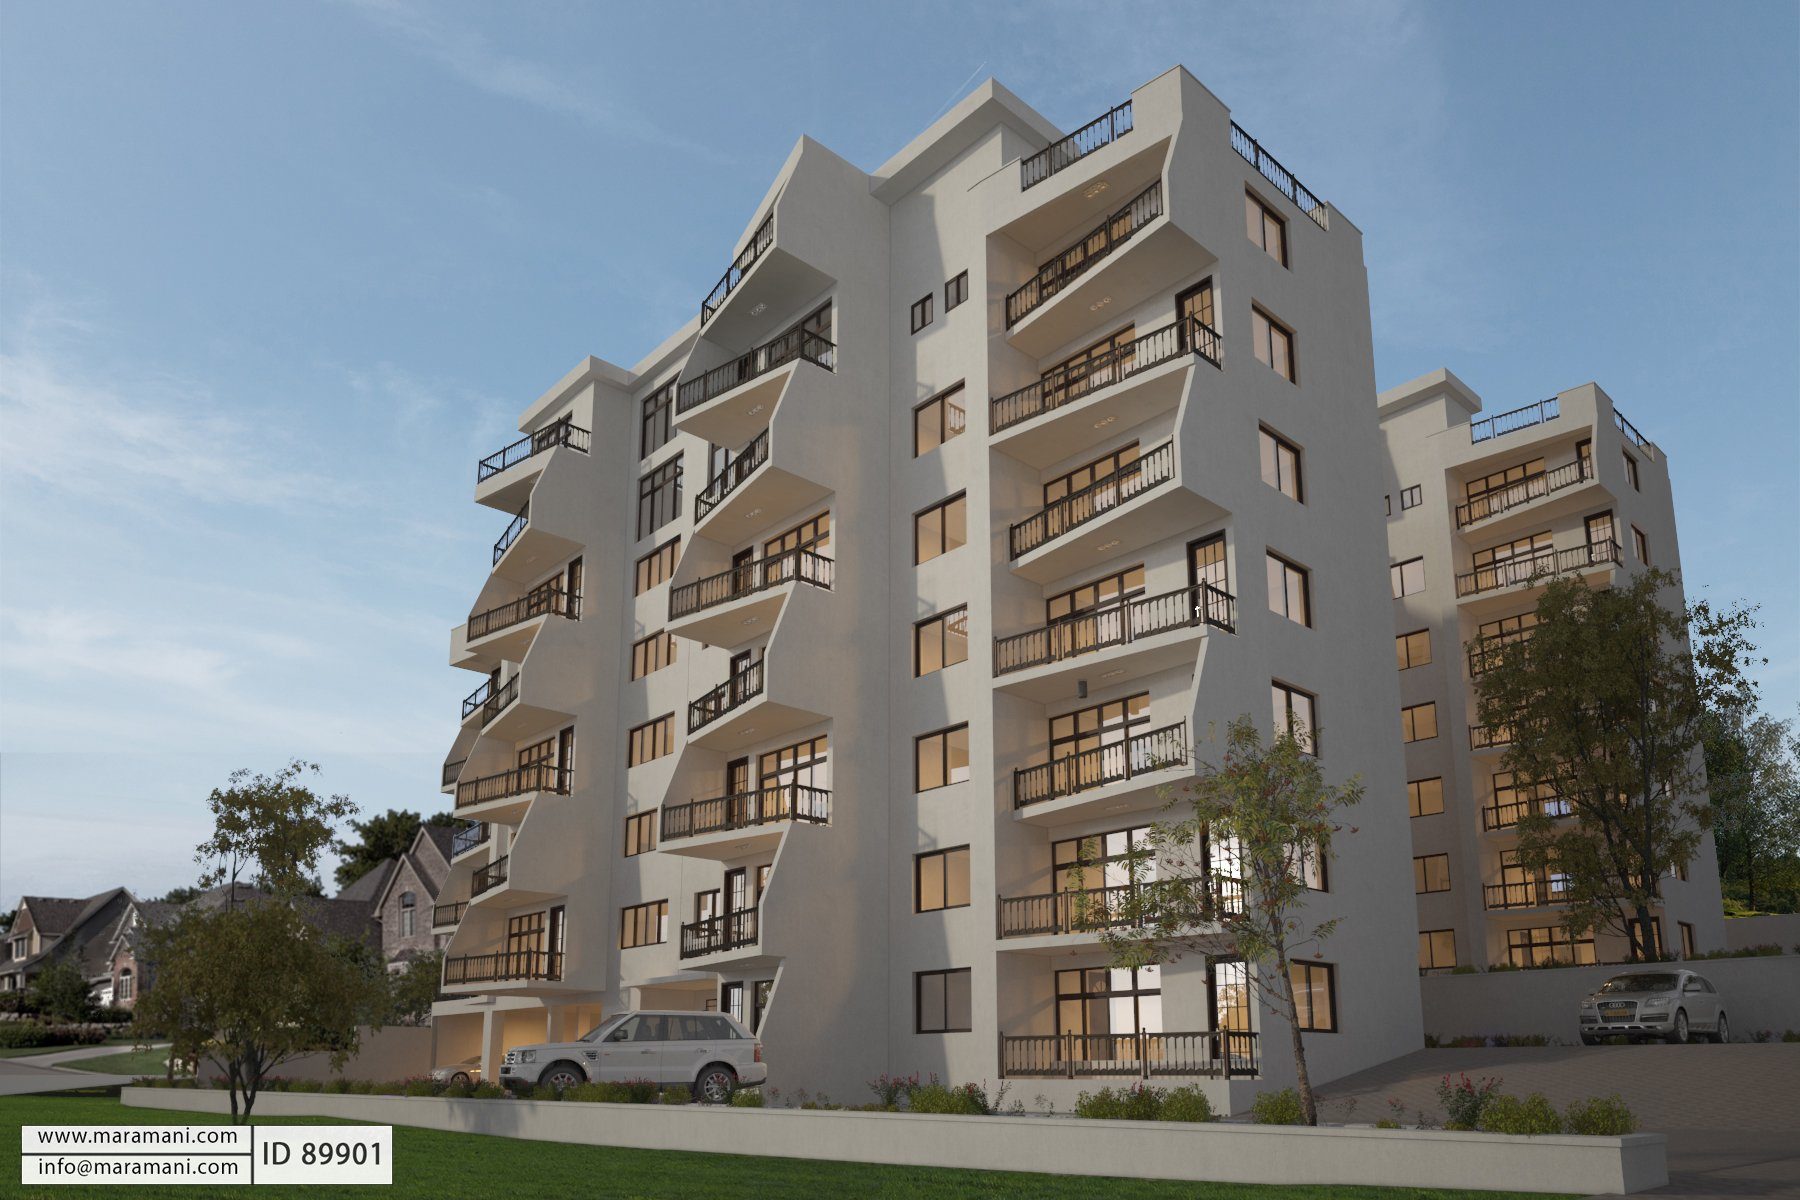 12 flat apartment block - ID 89901 - Designs by Maramani